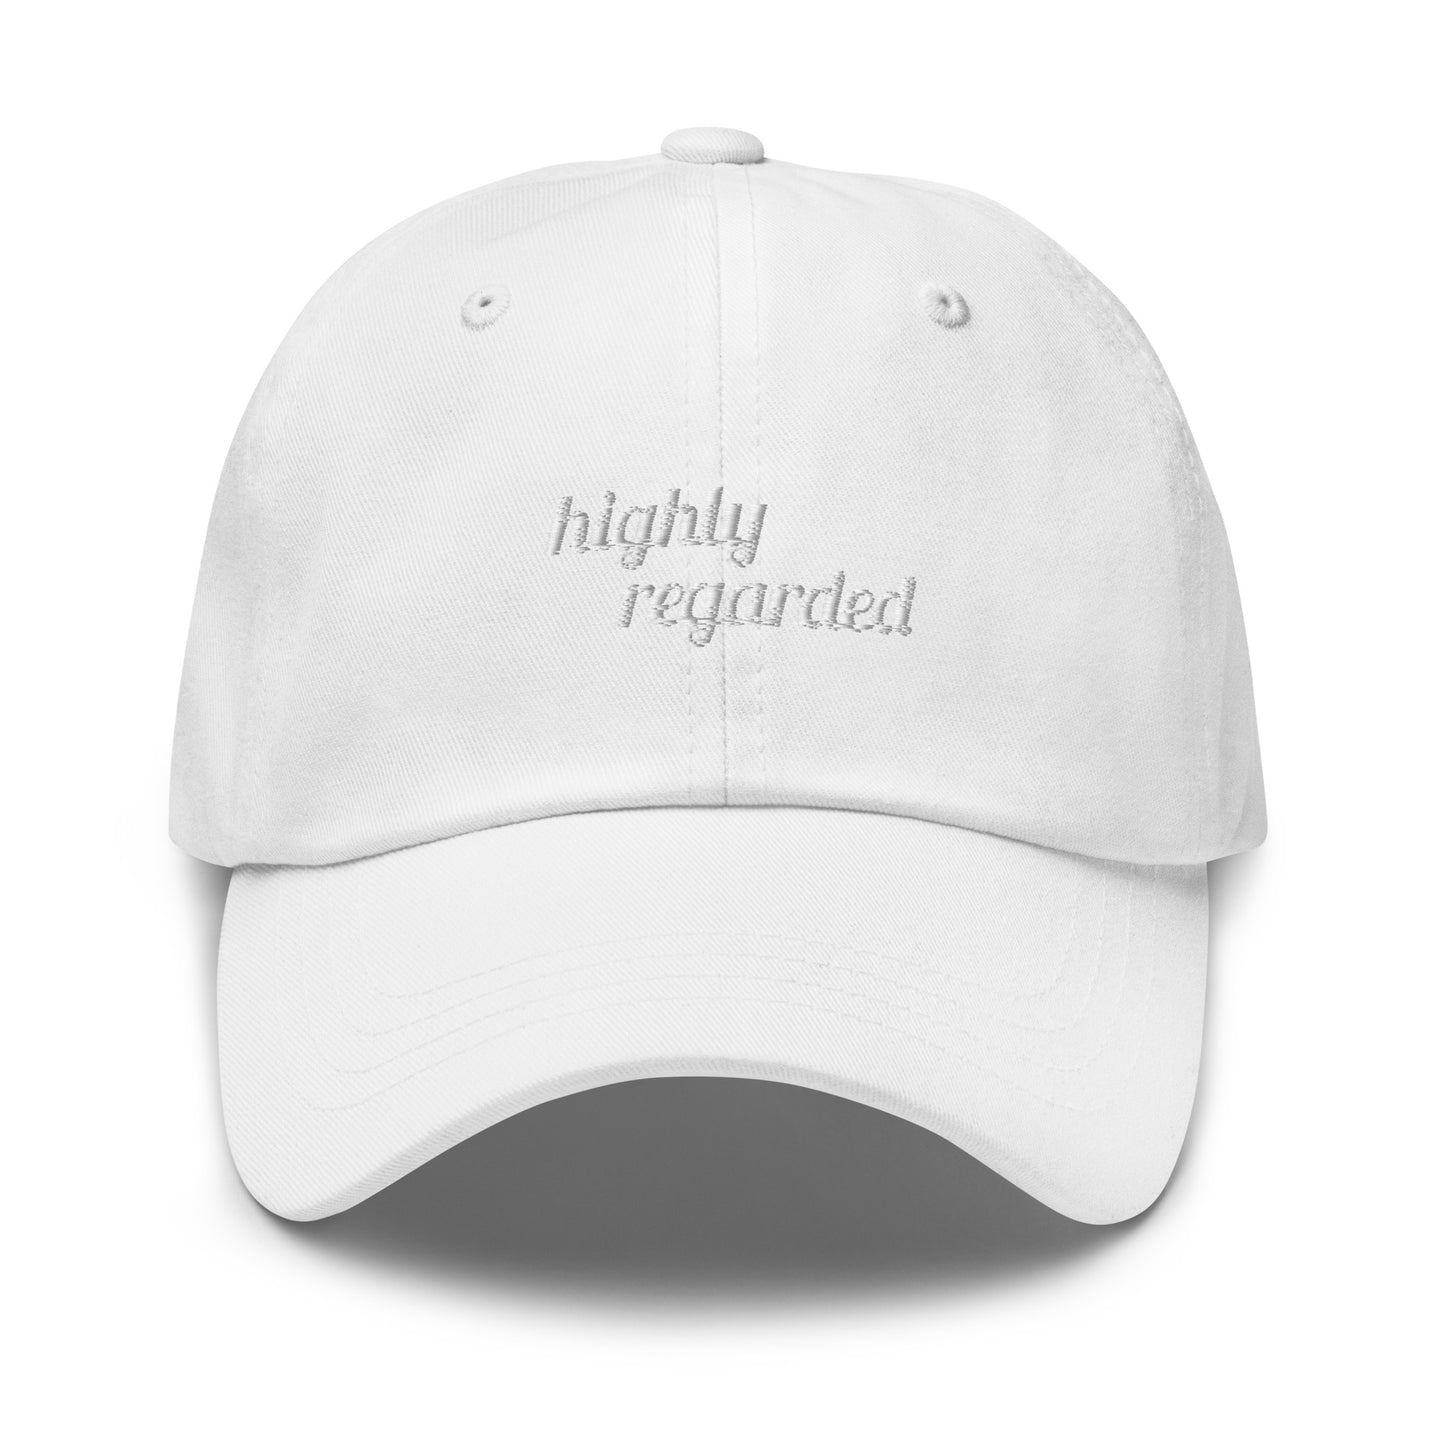 Highly regarded hat - WallStreet Autist